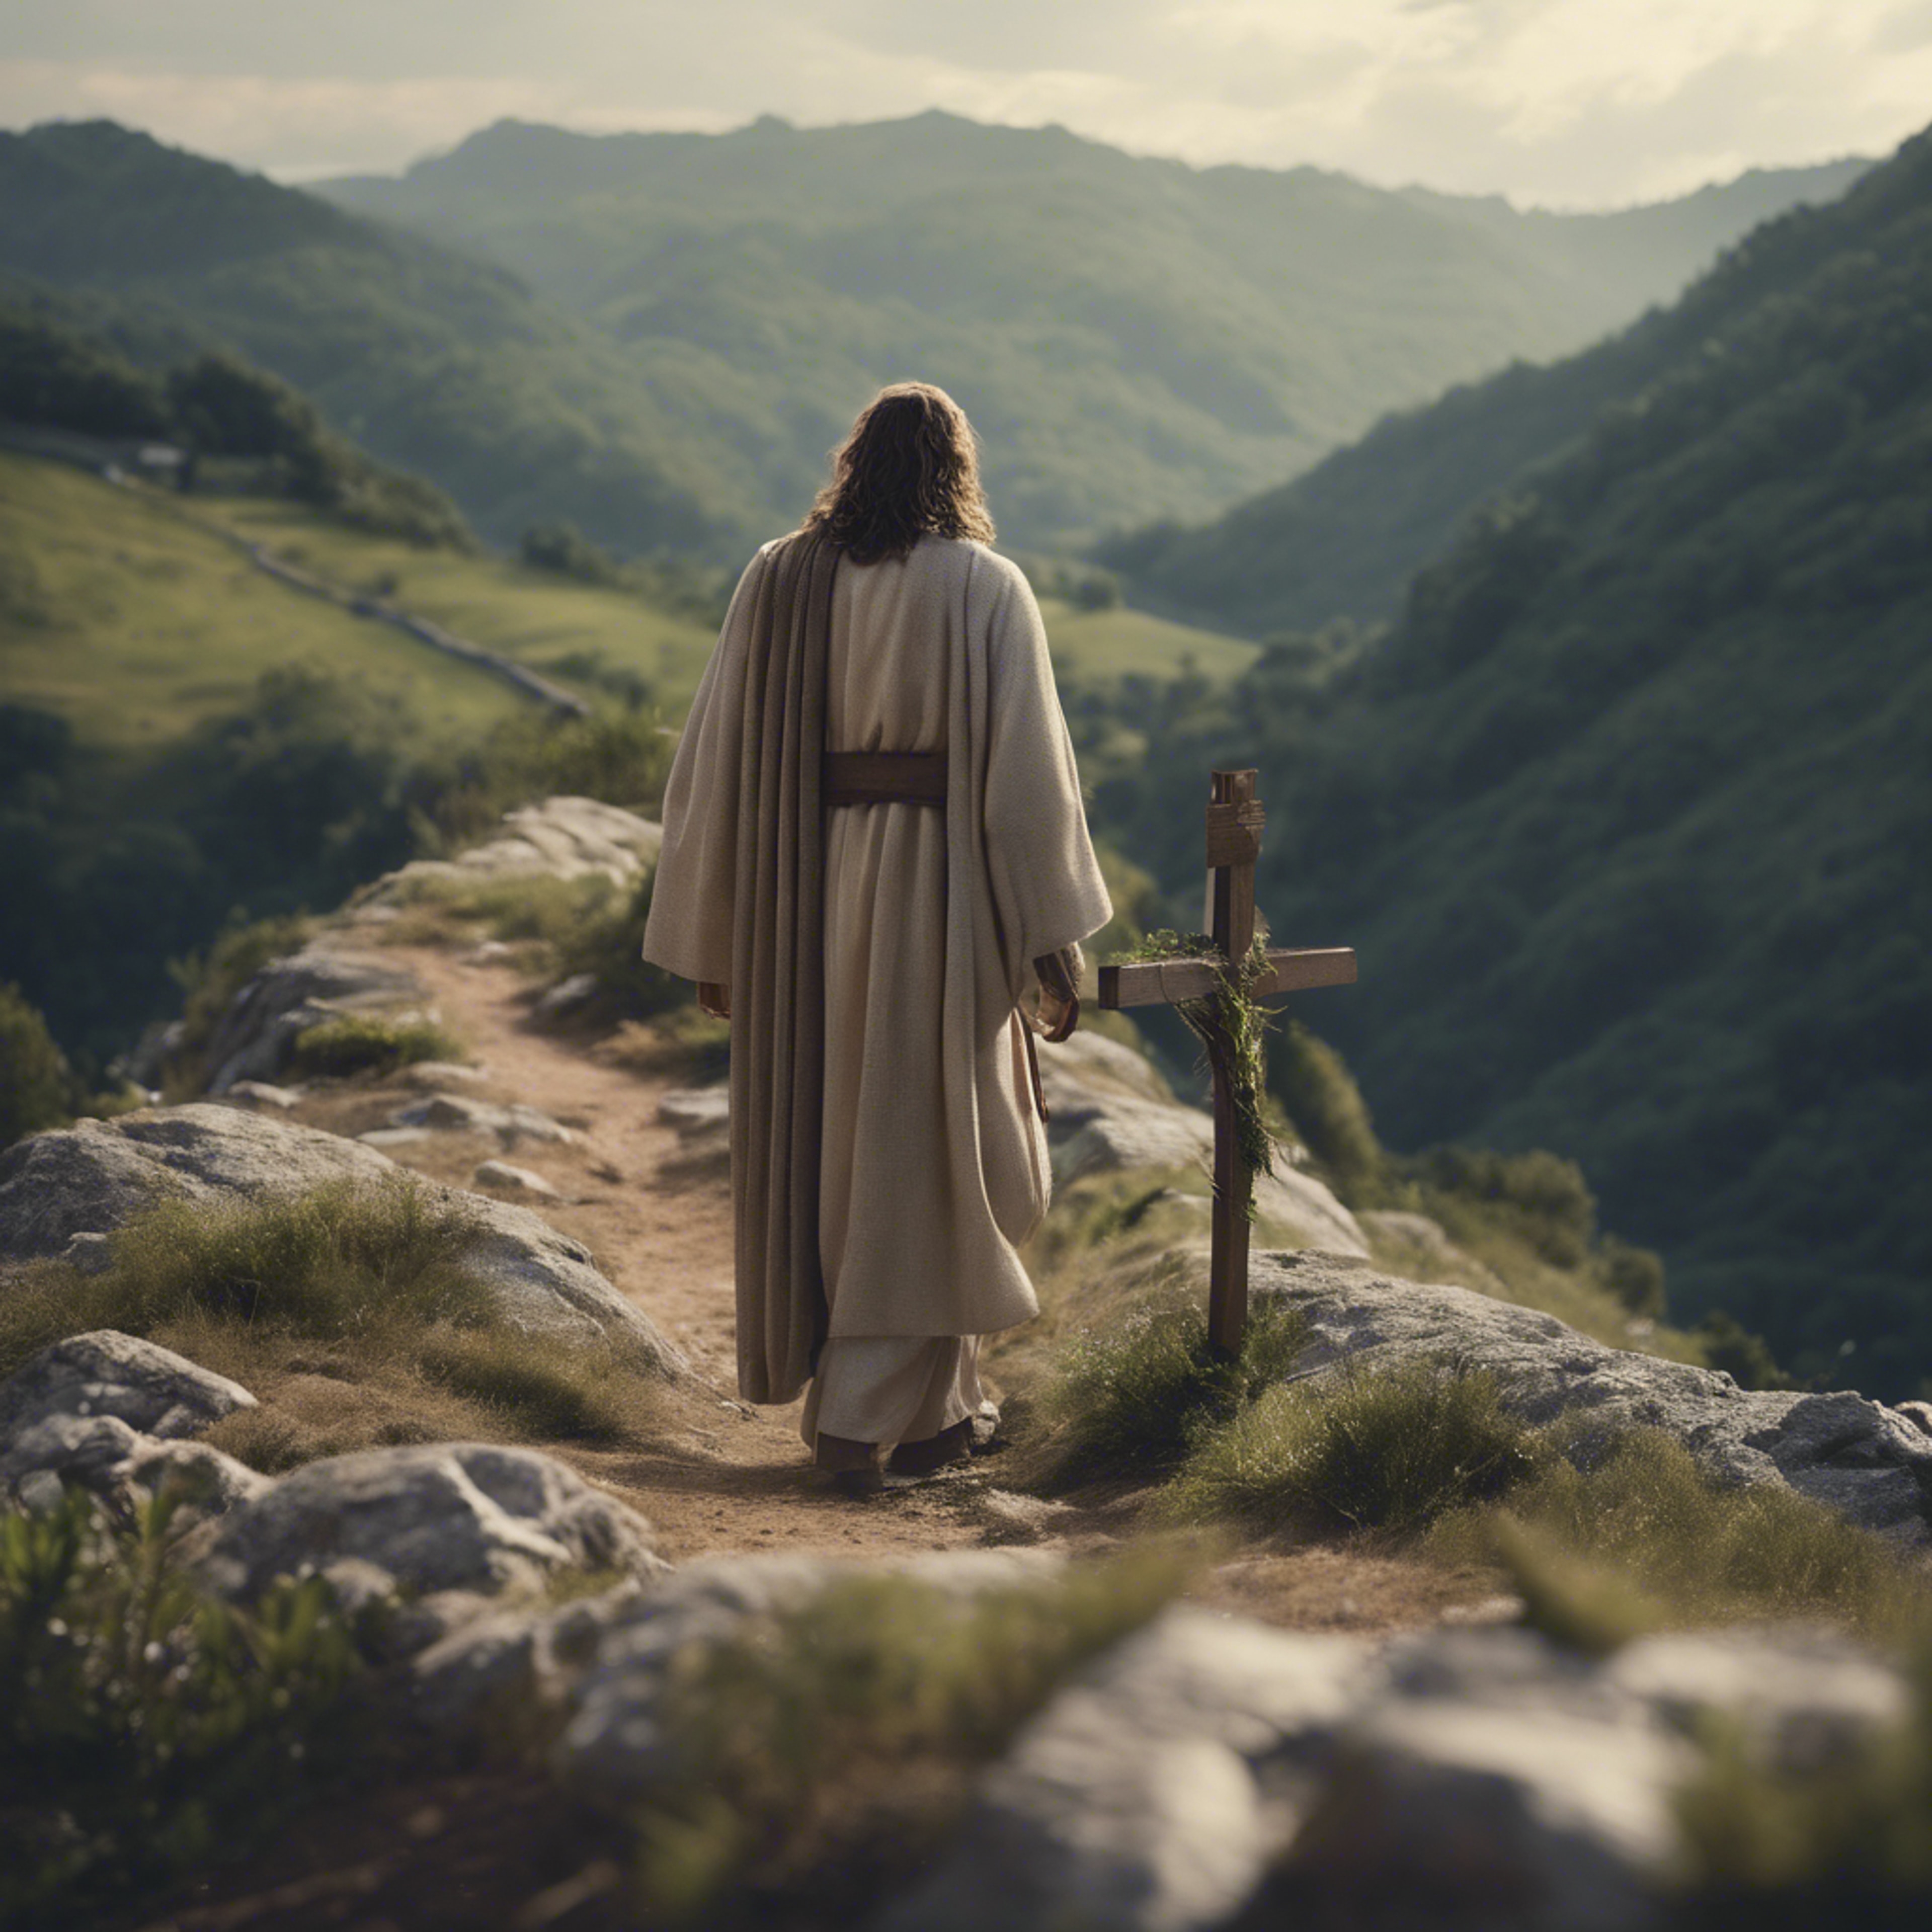 A somber yet inspiring scene of Jesus carrying the cross along a winding mountain path. Tapeet[cec6dd957e1b48d0bb97]